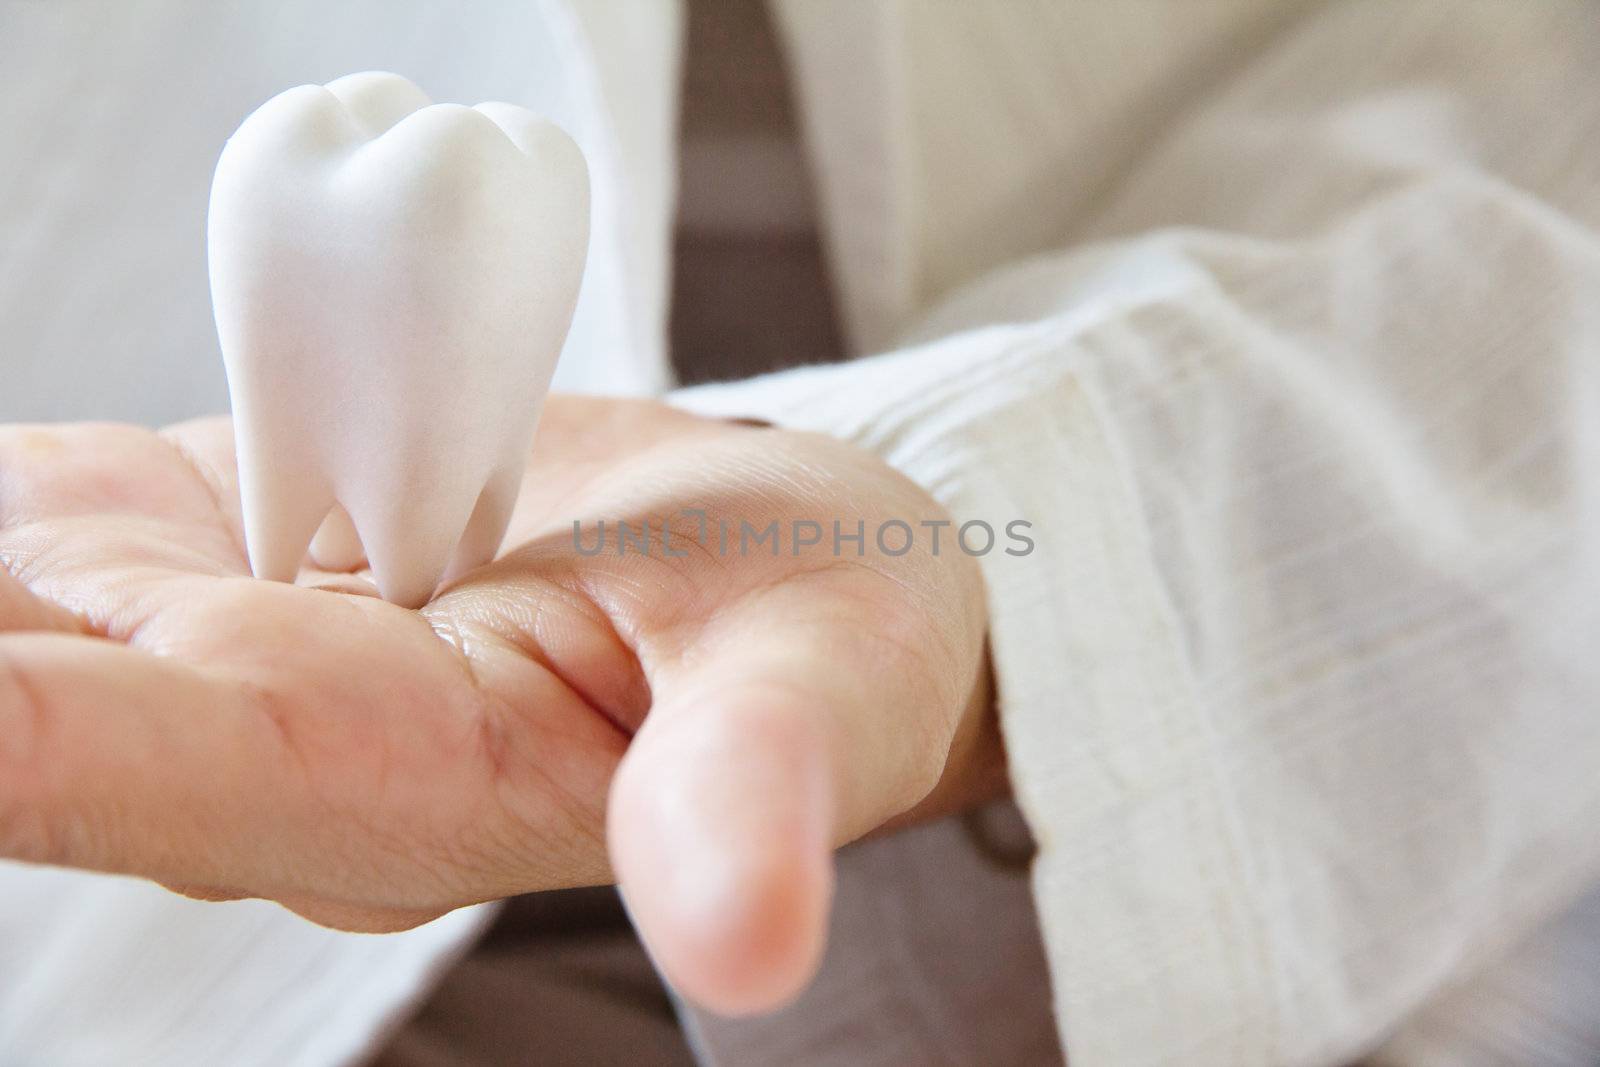 dentist holding molar,dental concept